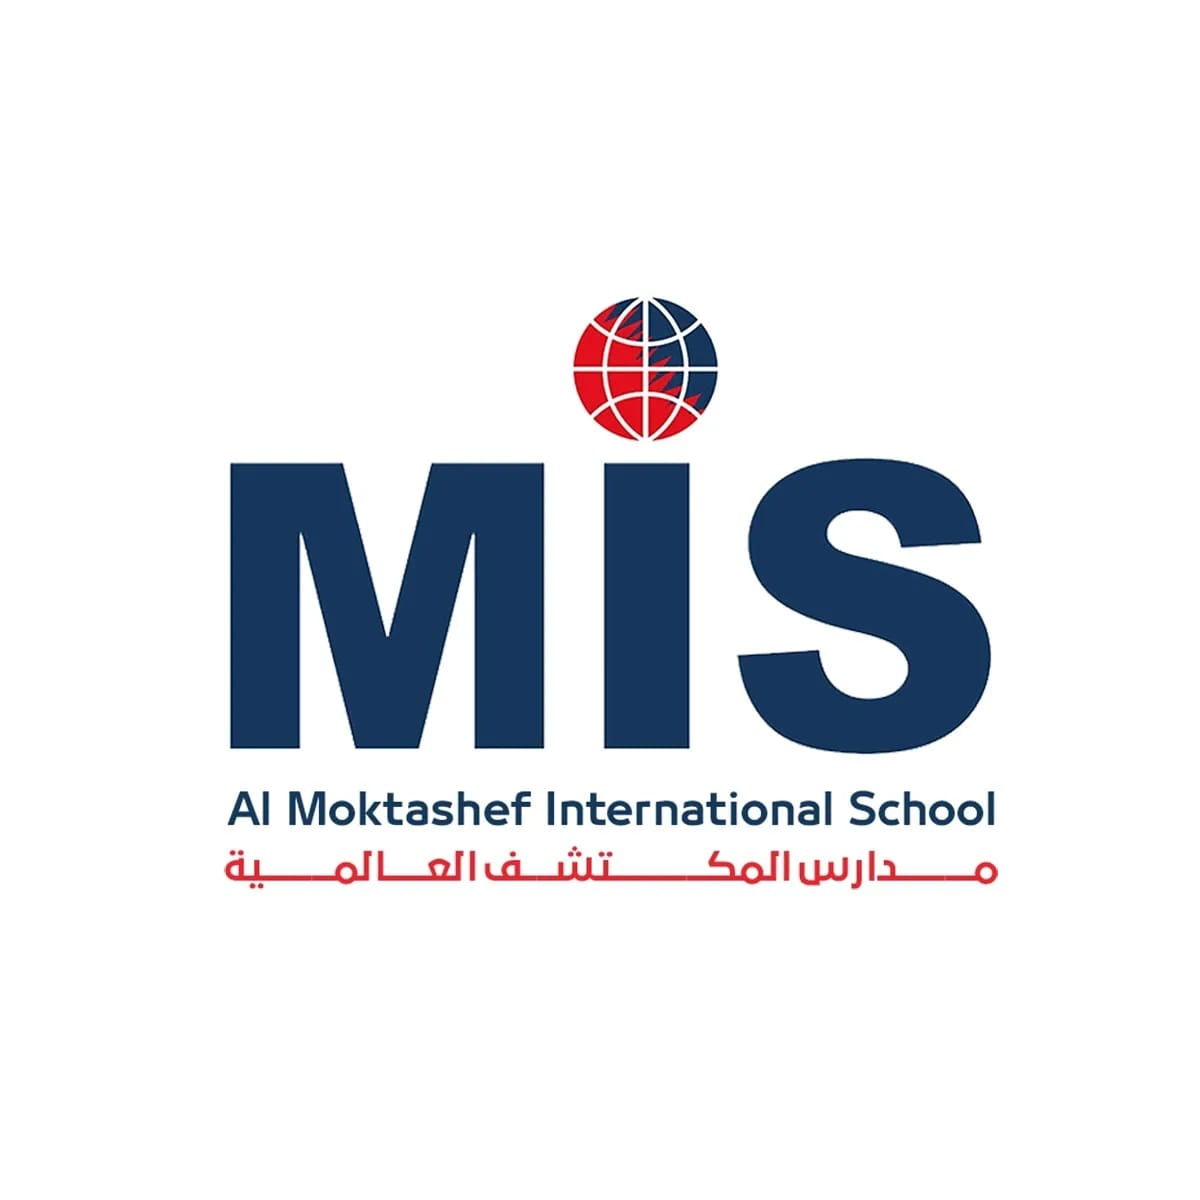 Al Moktashef International School